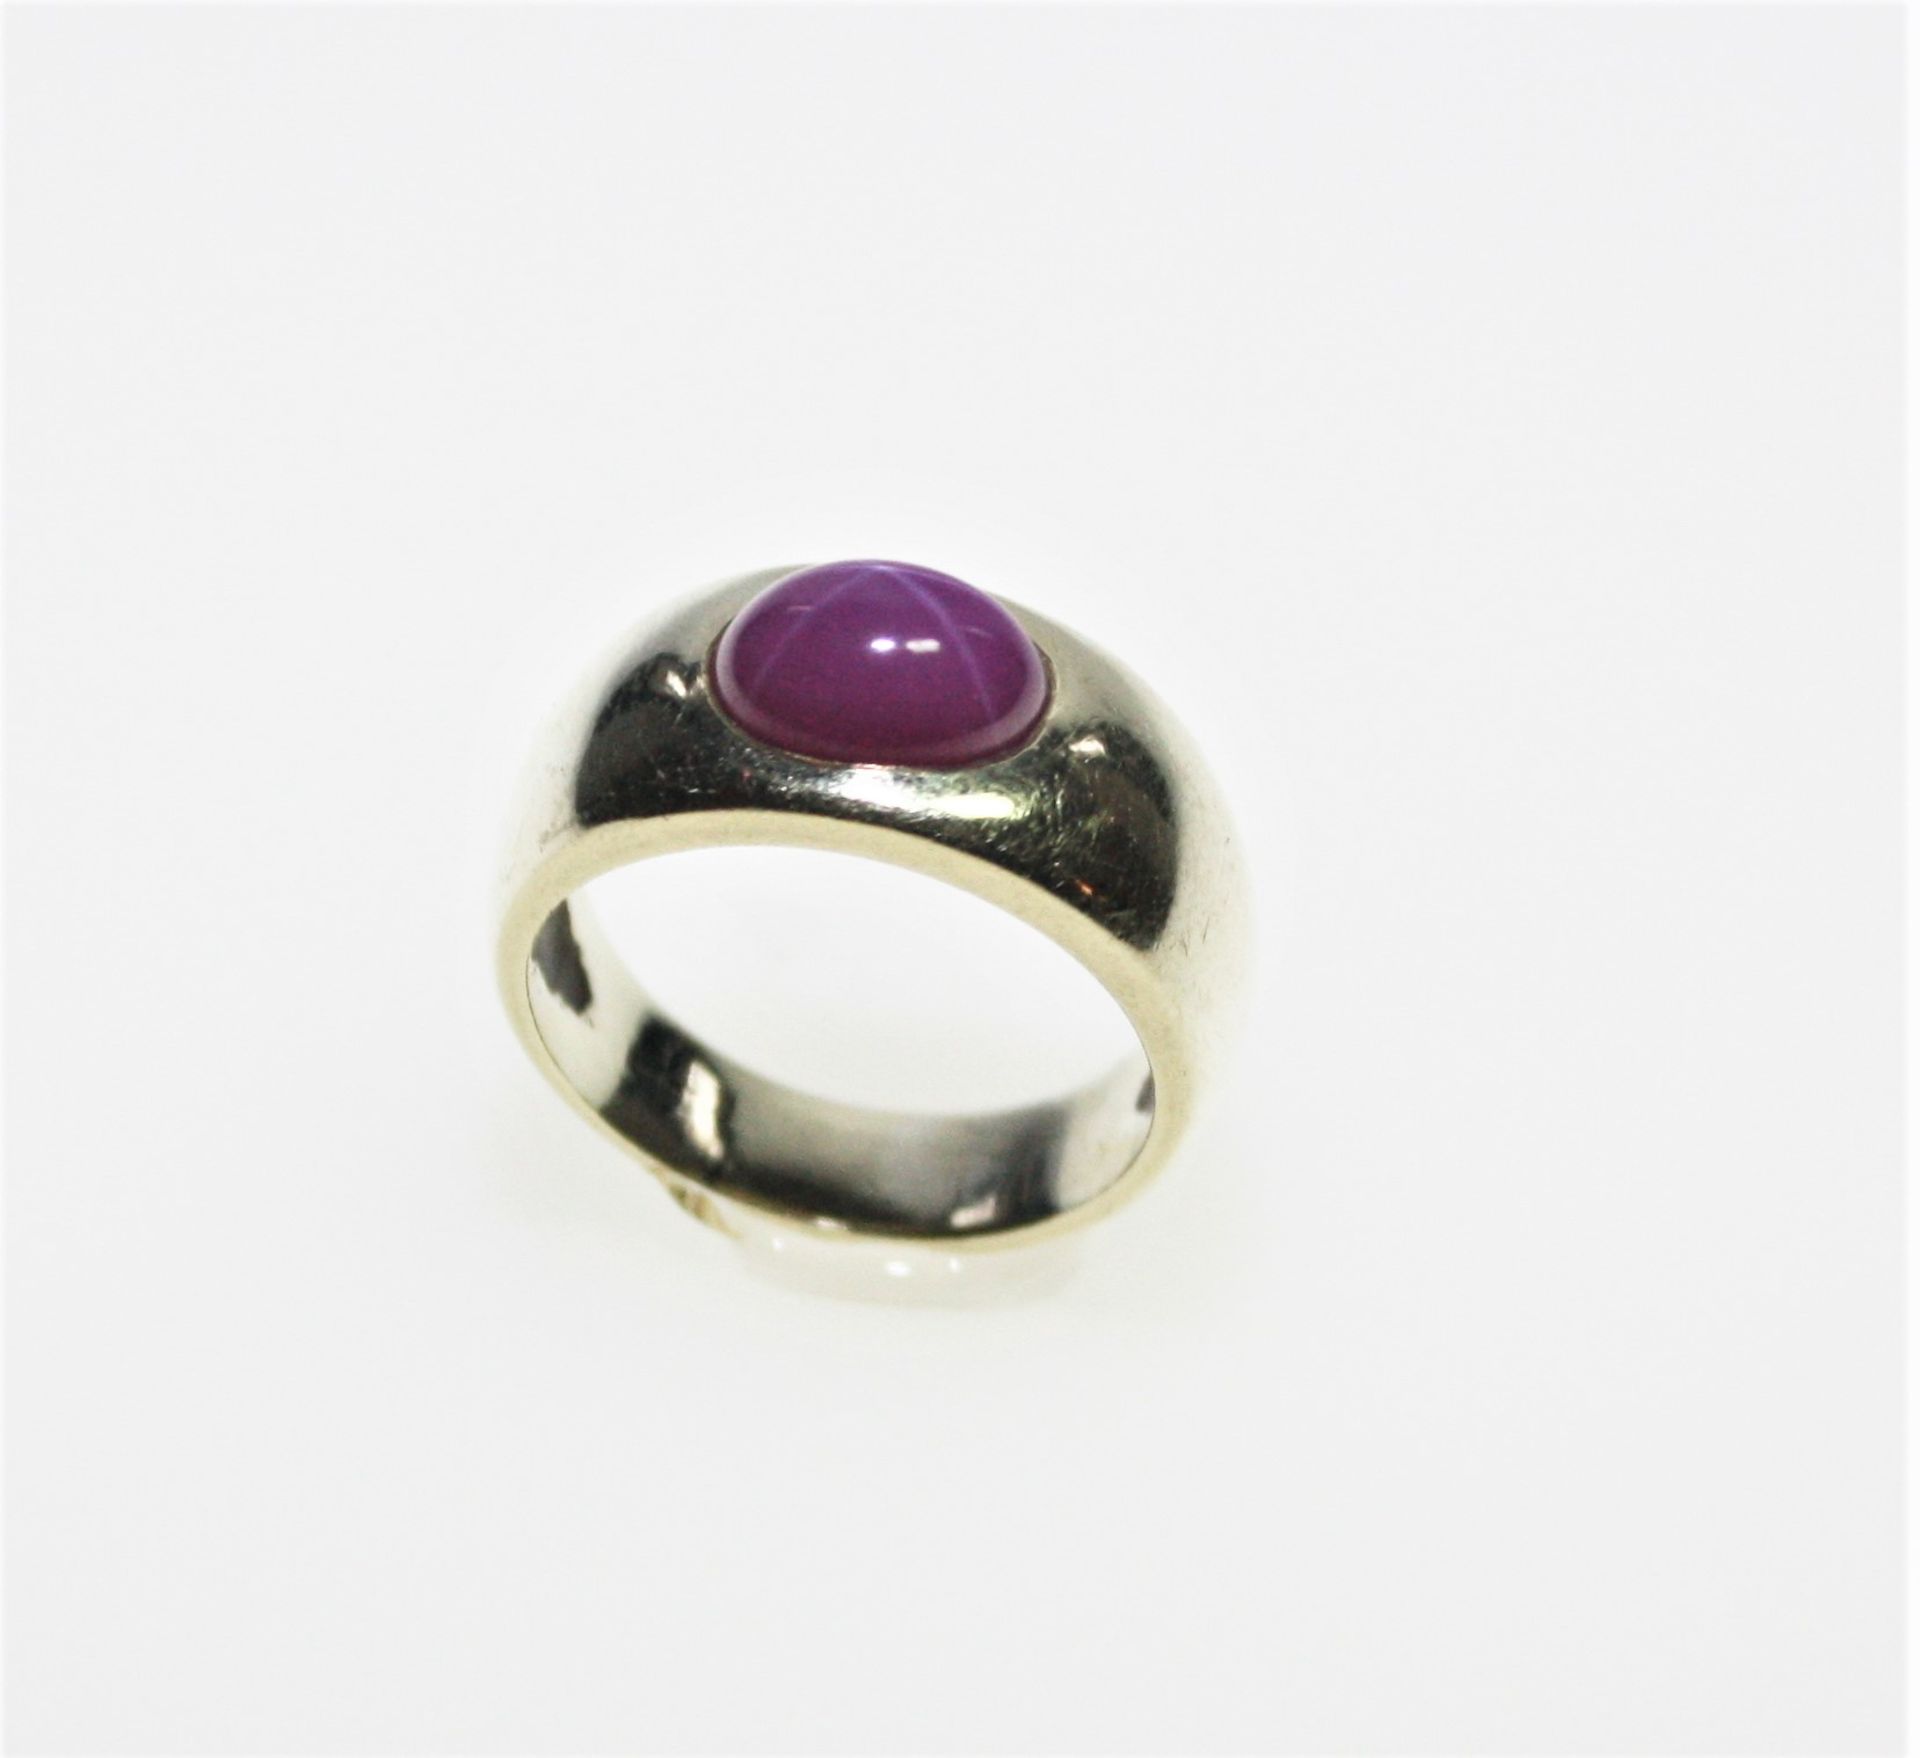 Ring - Image 2 of 2